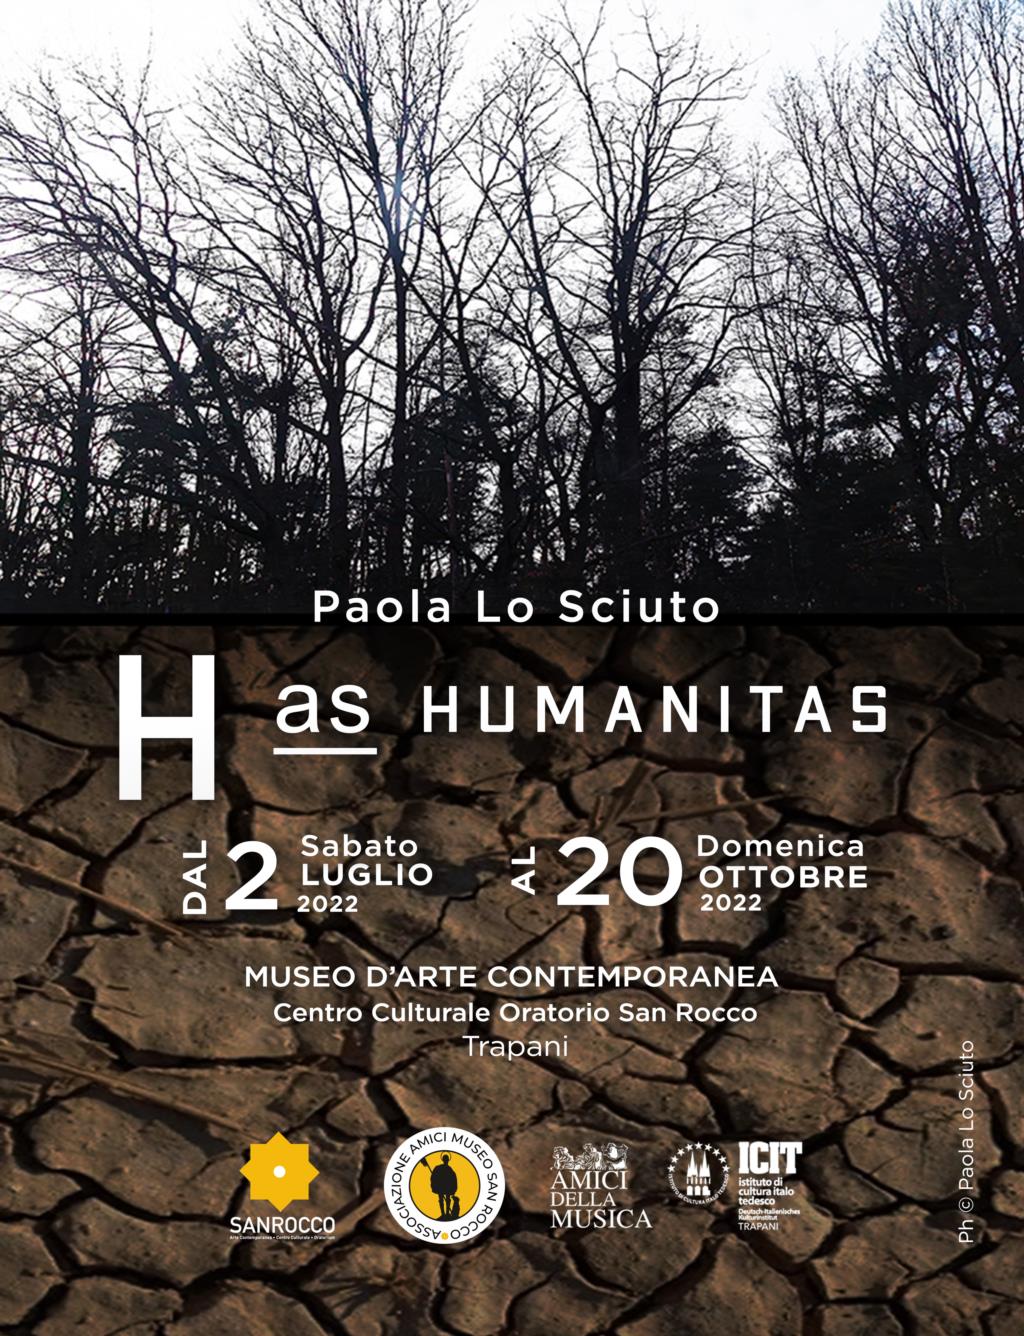 Trapani, si inaugura domani la mostra 'H as Humanitas'